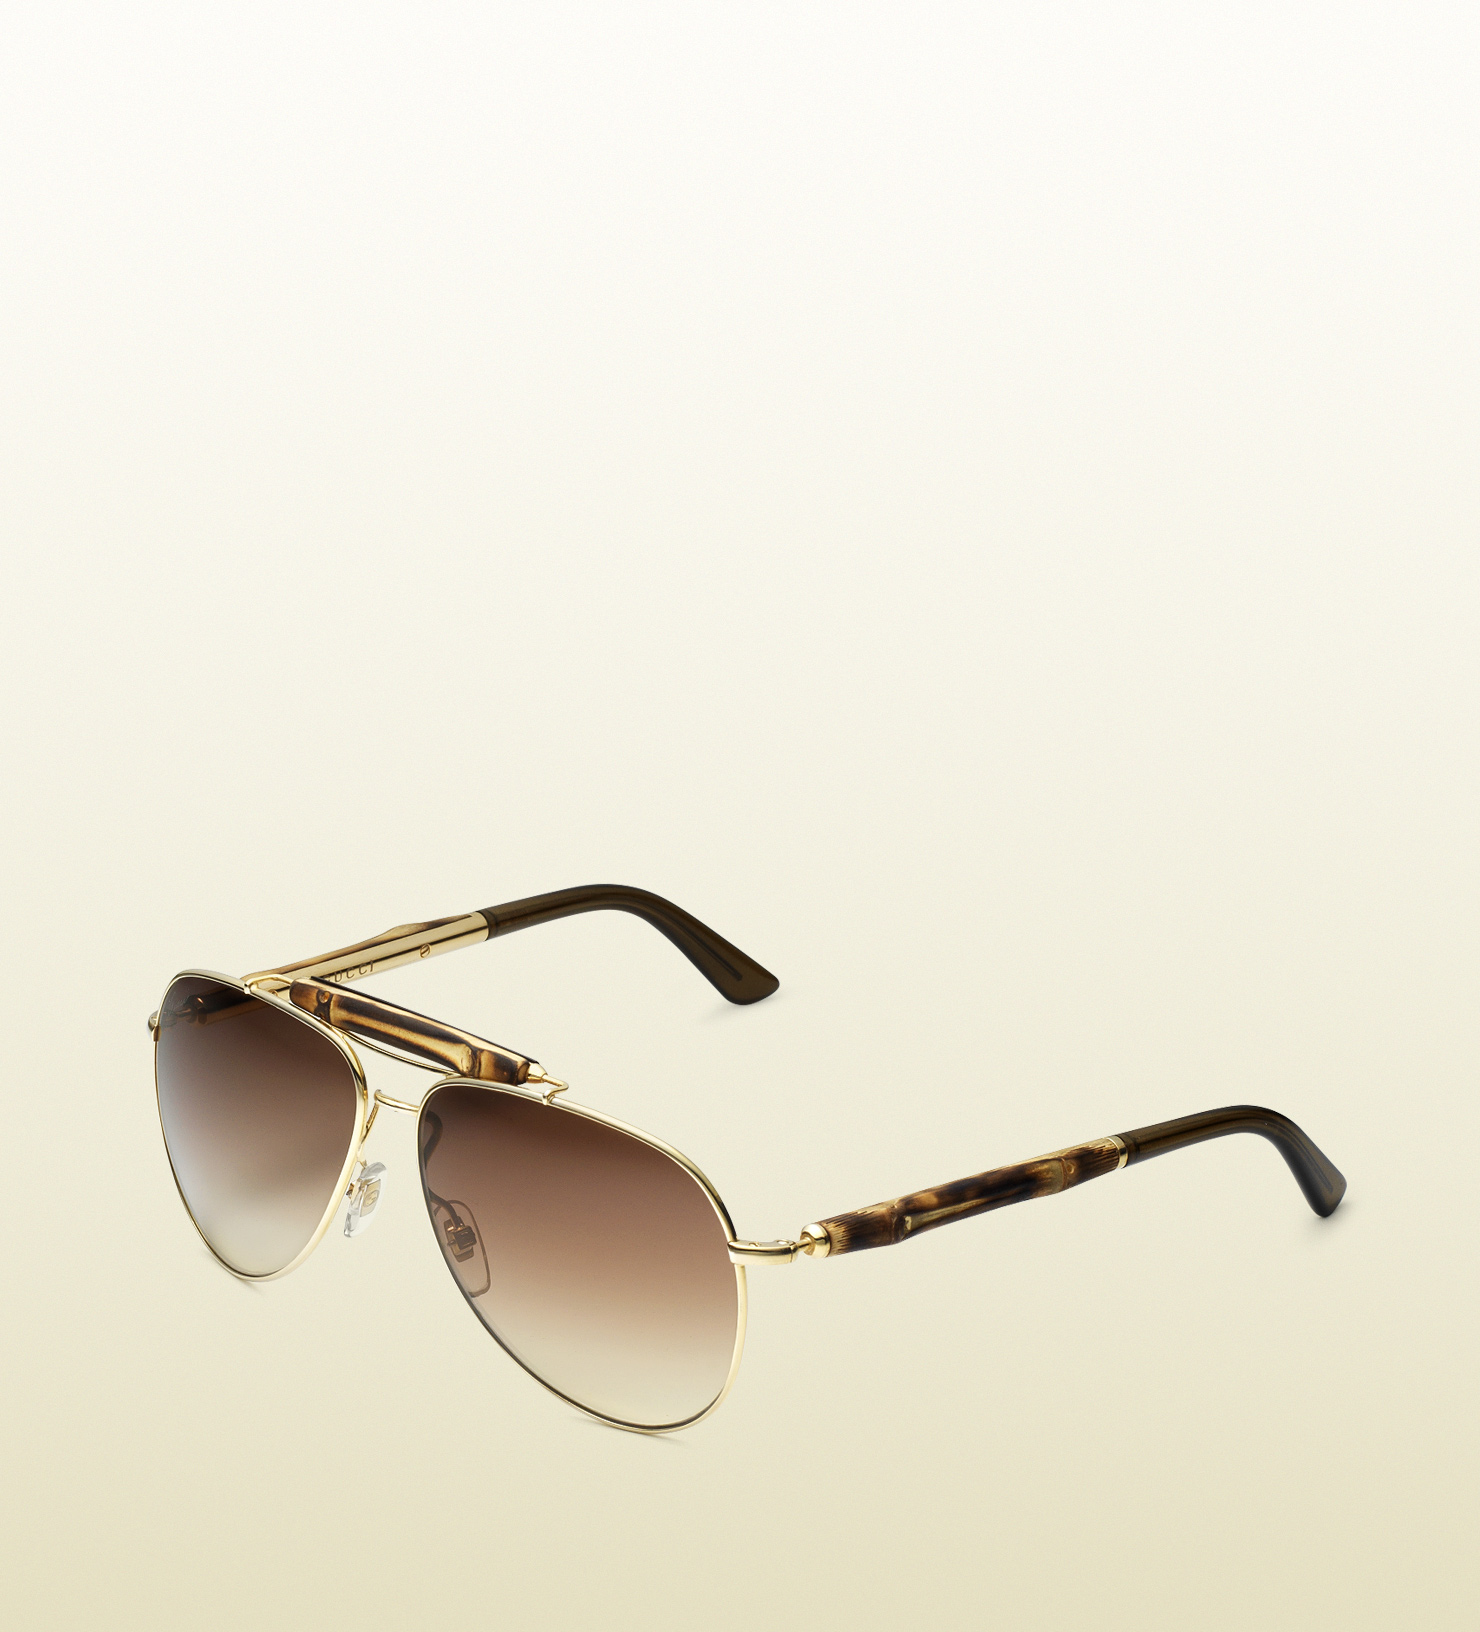 Gucci Bamboo Aviator Sunglasses in 